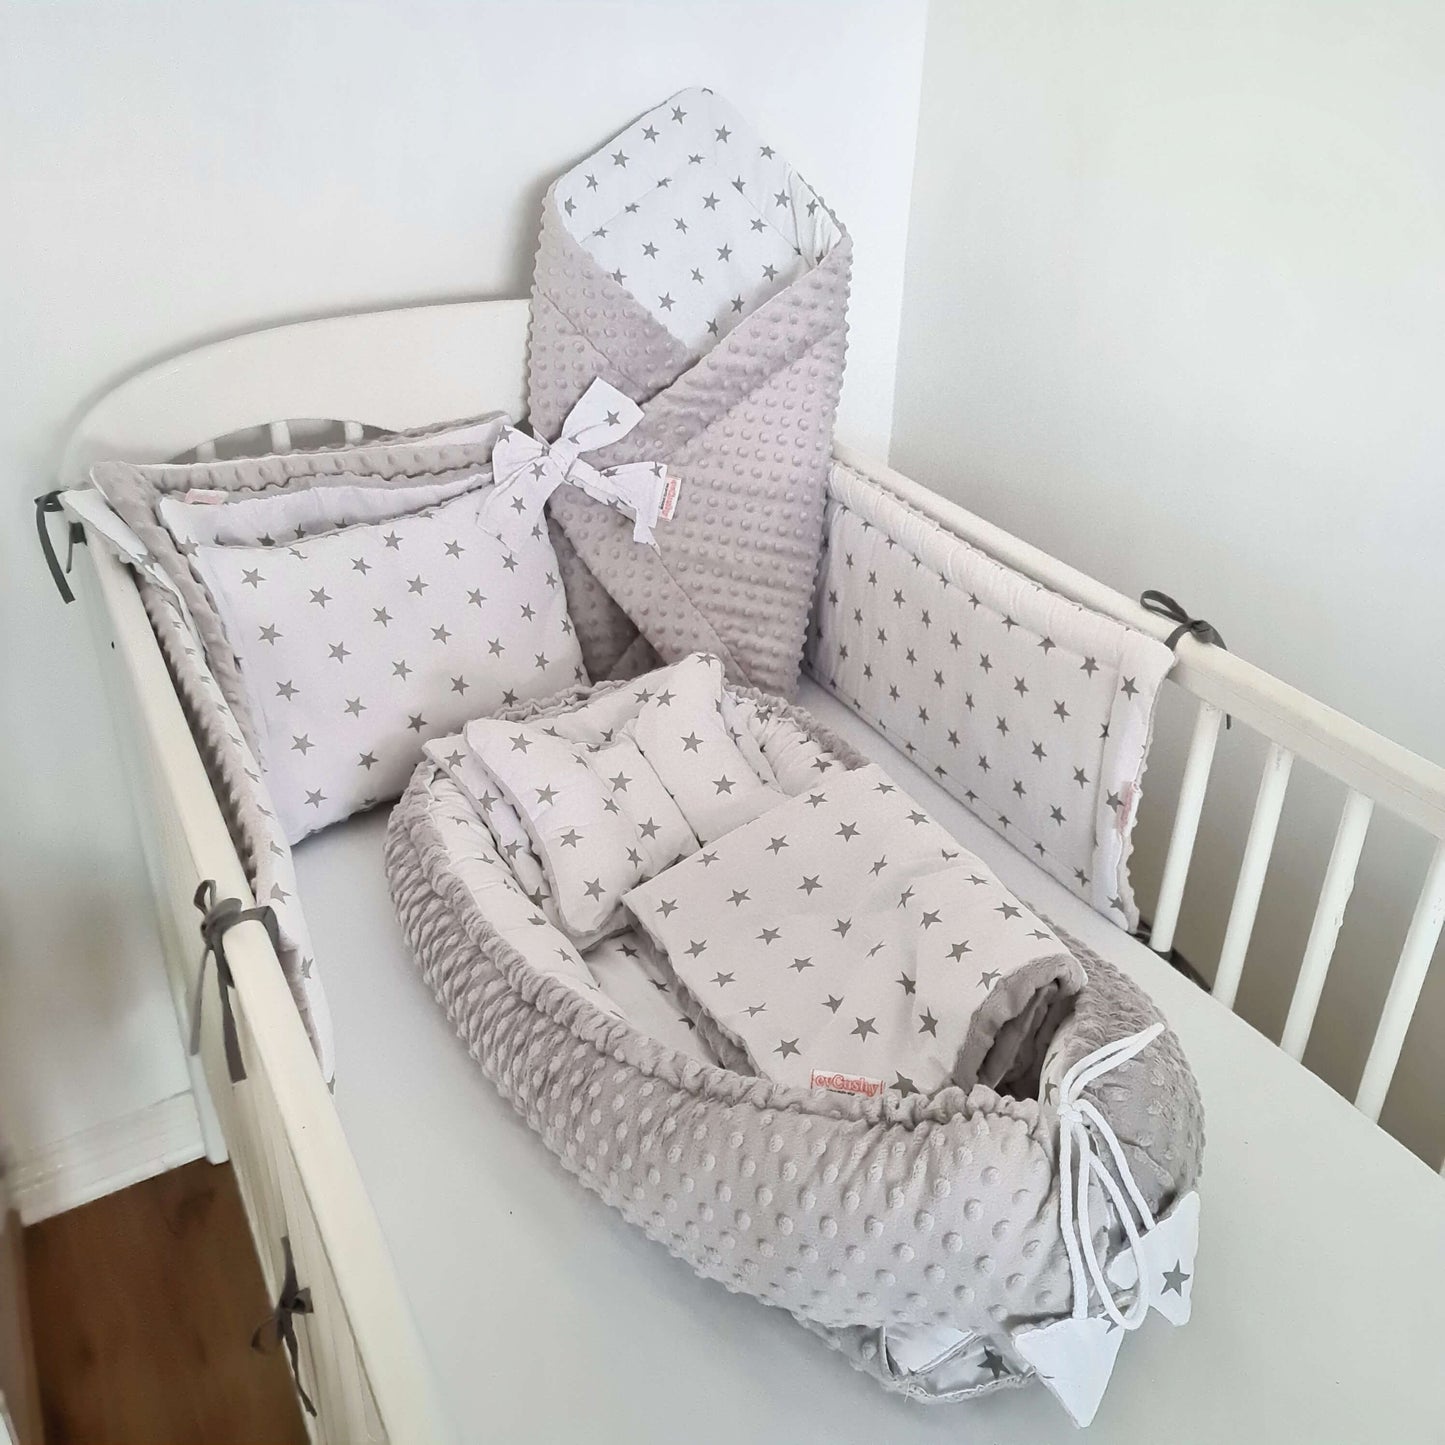 accessories for new baby newborn starter set cot bedding in Ireland